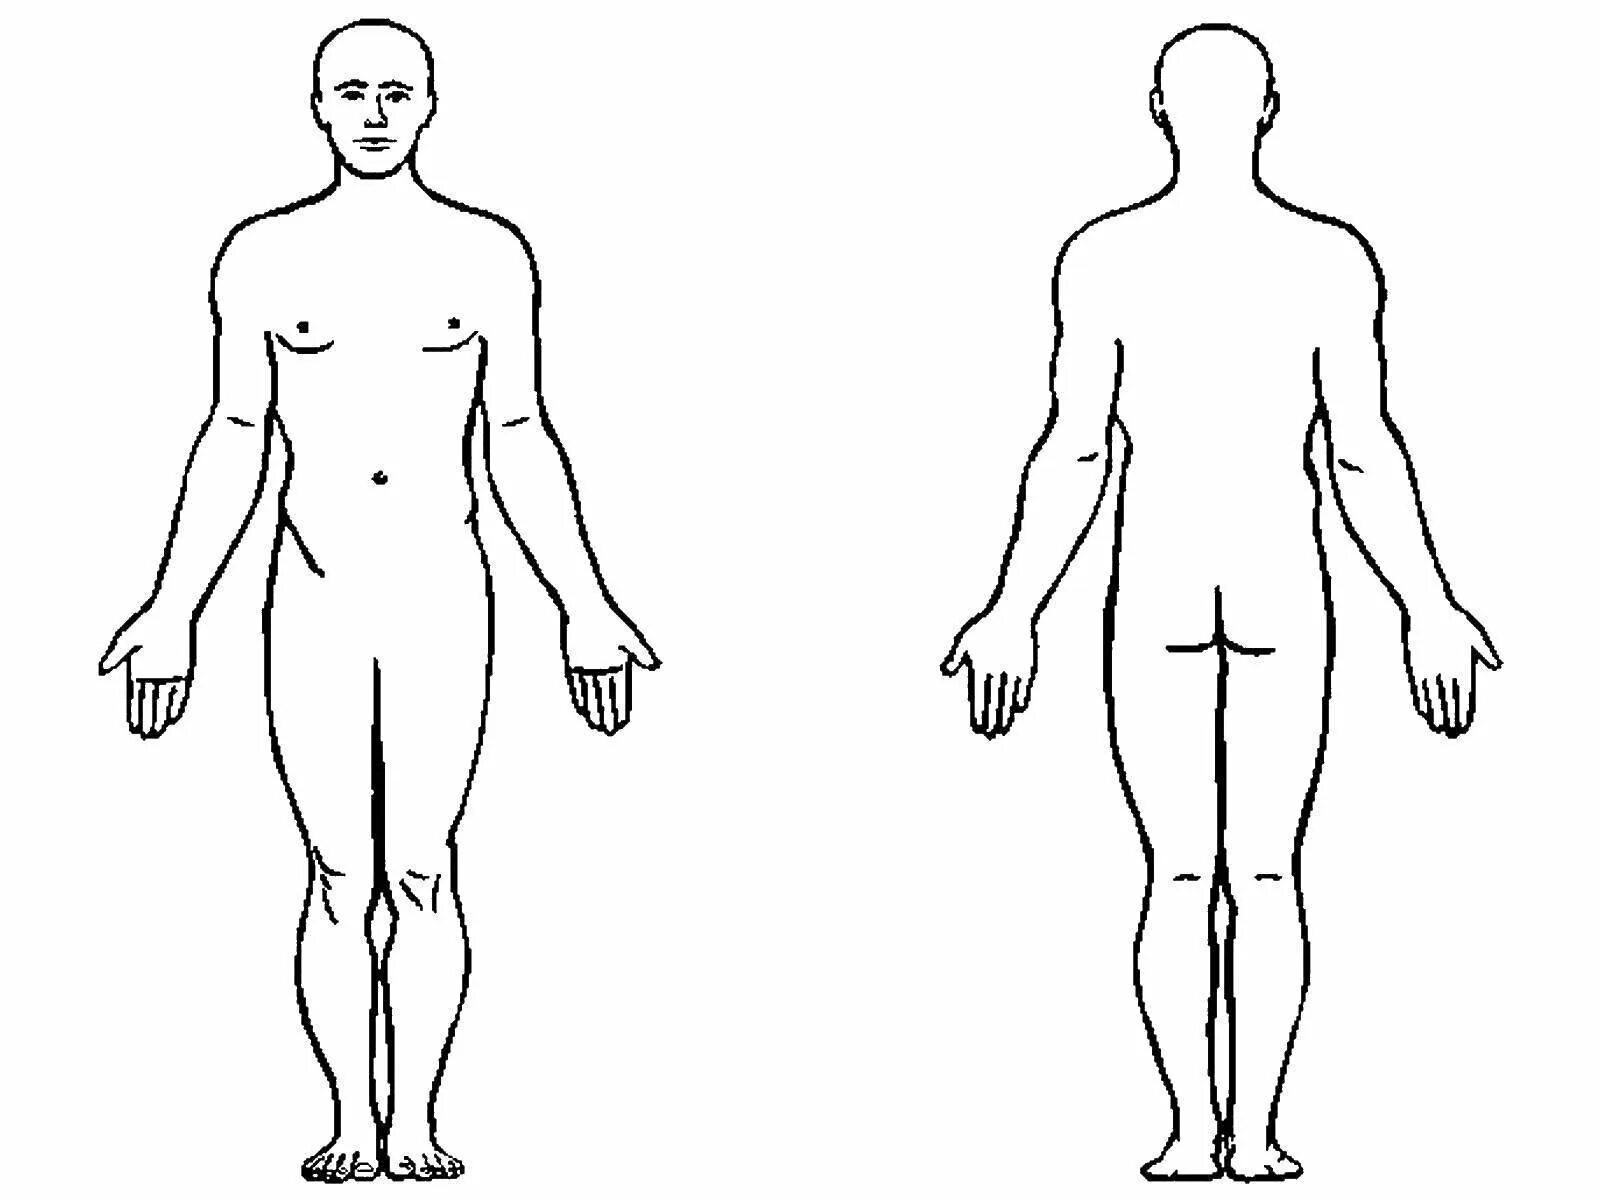 Схема человека. Контур тела человека спереди. Тело человека вид спереди и сзади рисунок. Человек схематично. Макет тела человека.